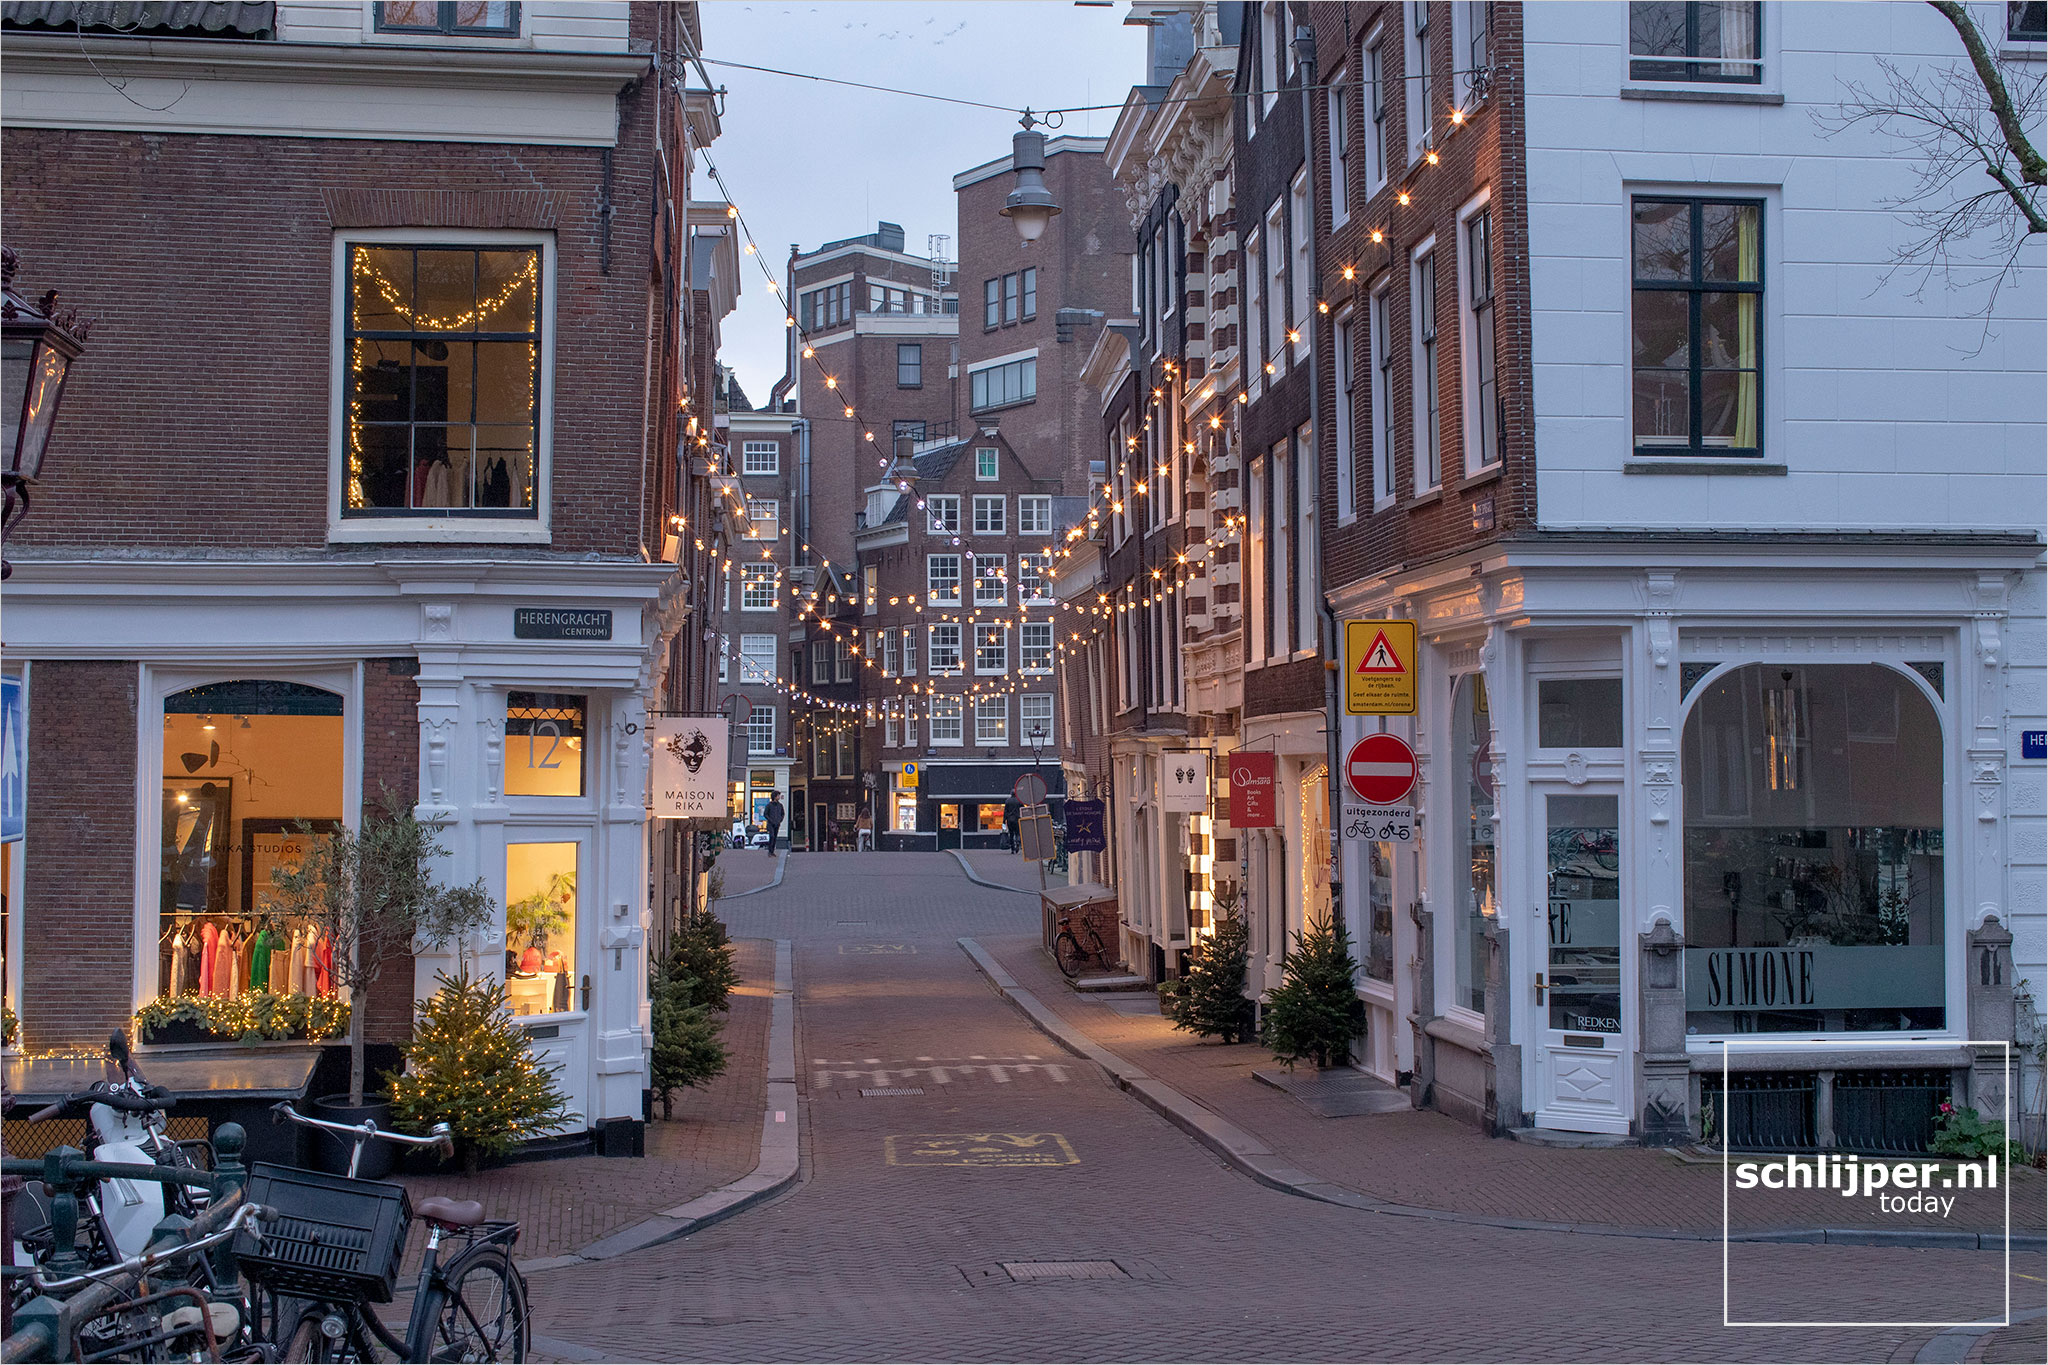 The Netherlands, Amsterdam, 15 december 2020